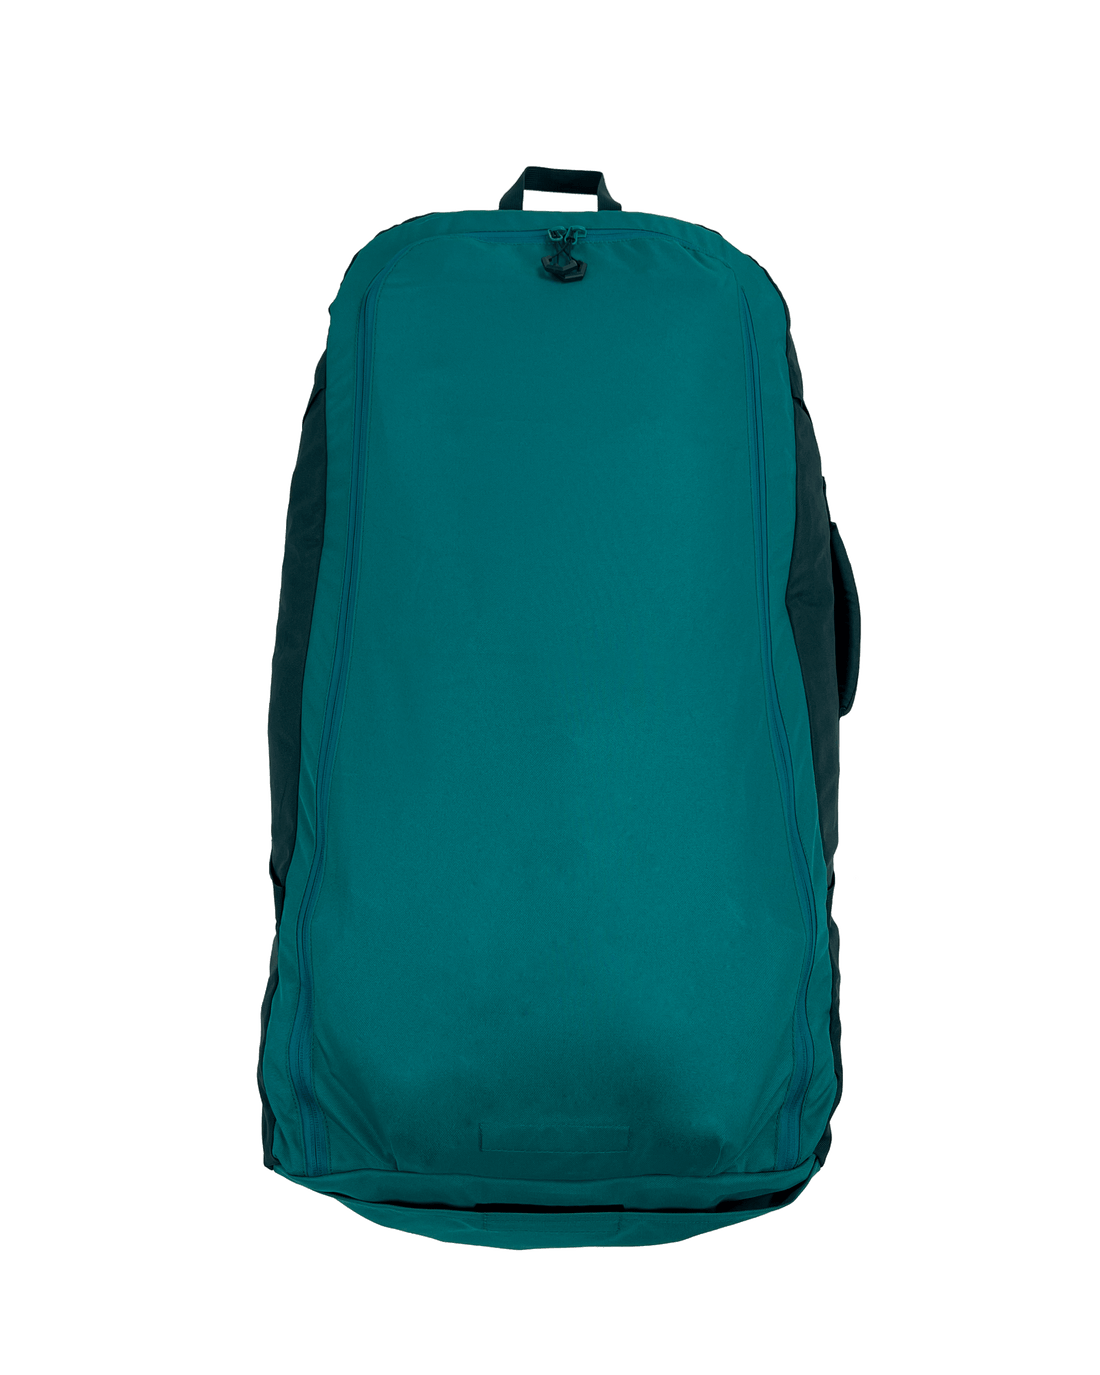 Black Wolf - Fulham II 80 Backpack - Quetzal Green/Sea Moss-5